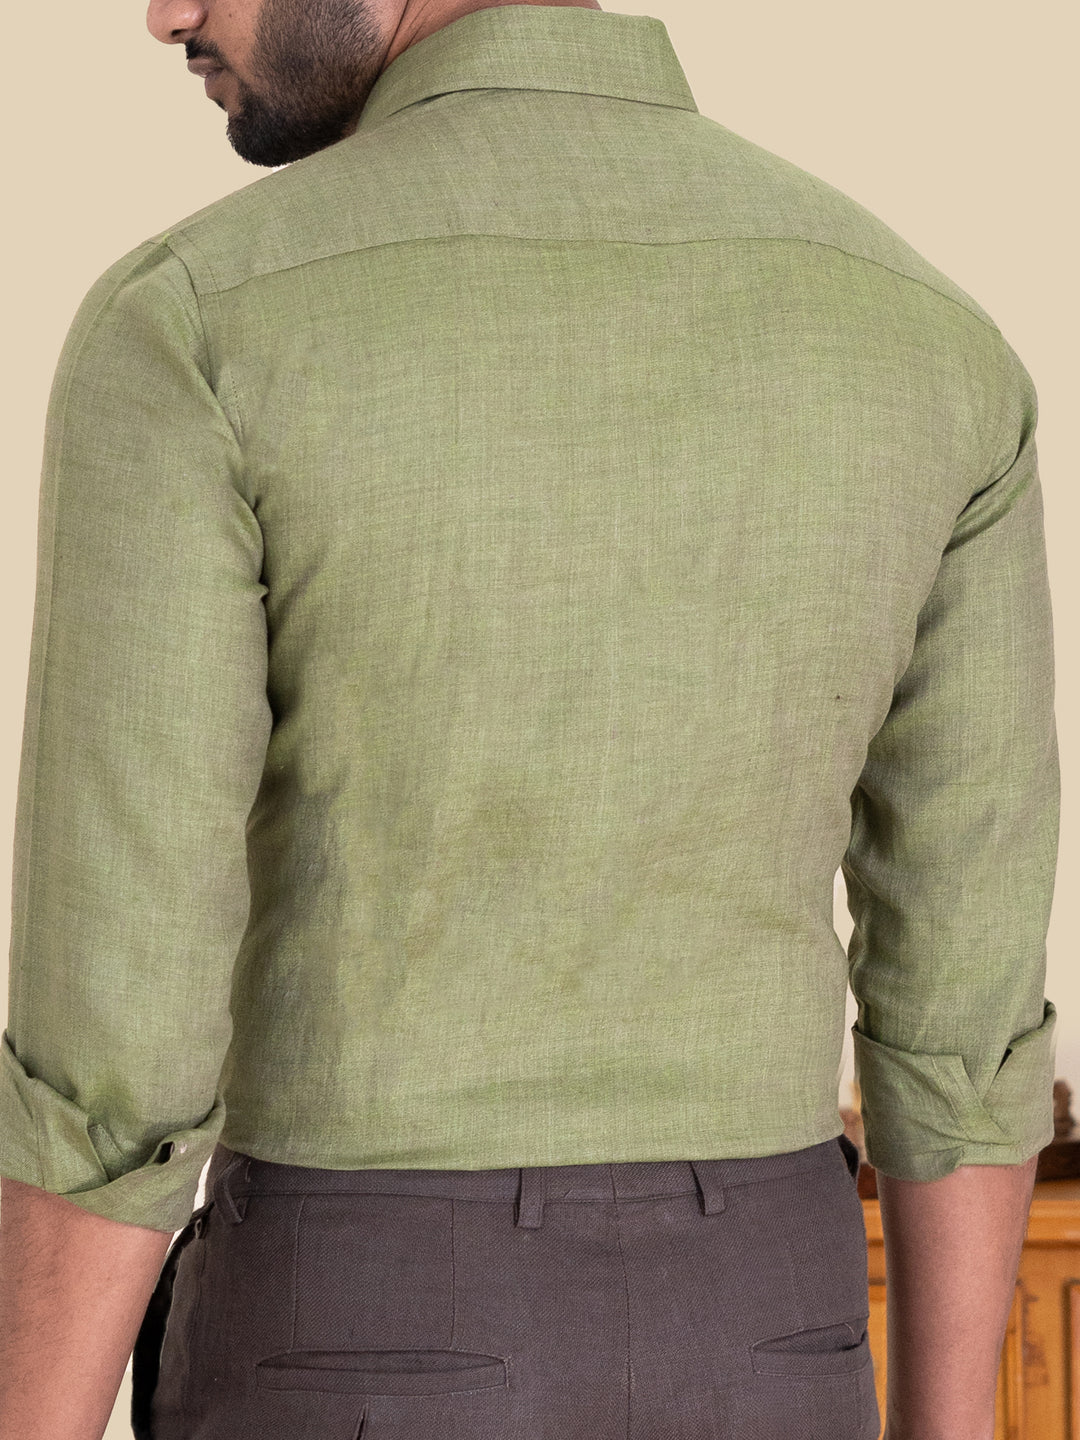 Harvey - Pure Linen Full Sleeve Shirt - Jade Green